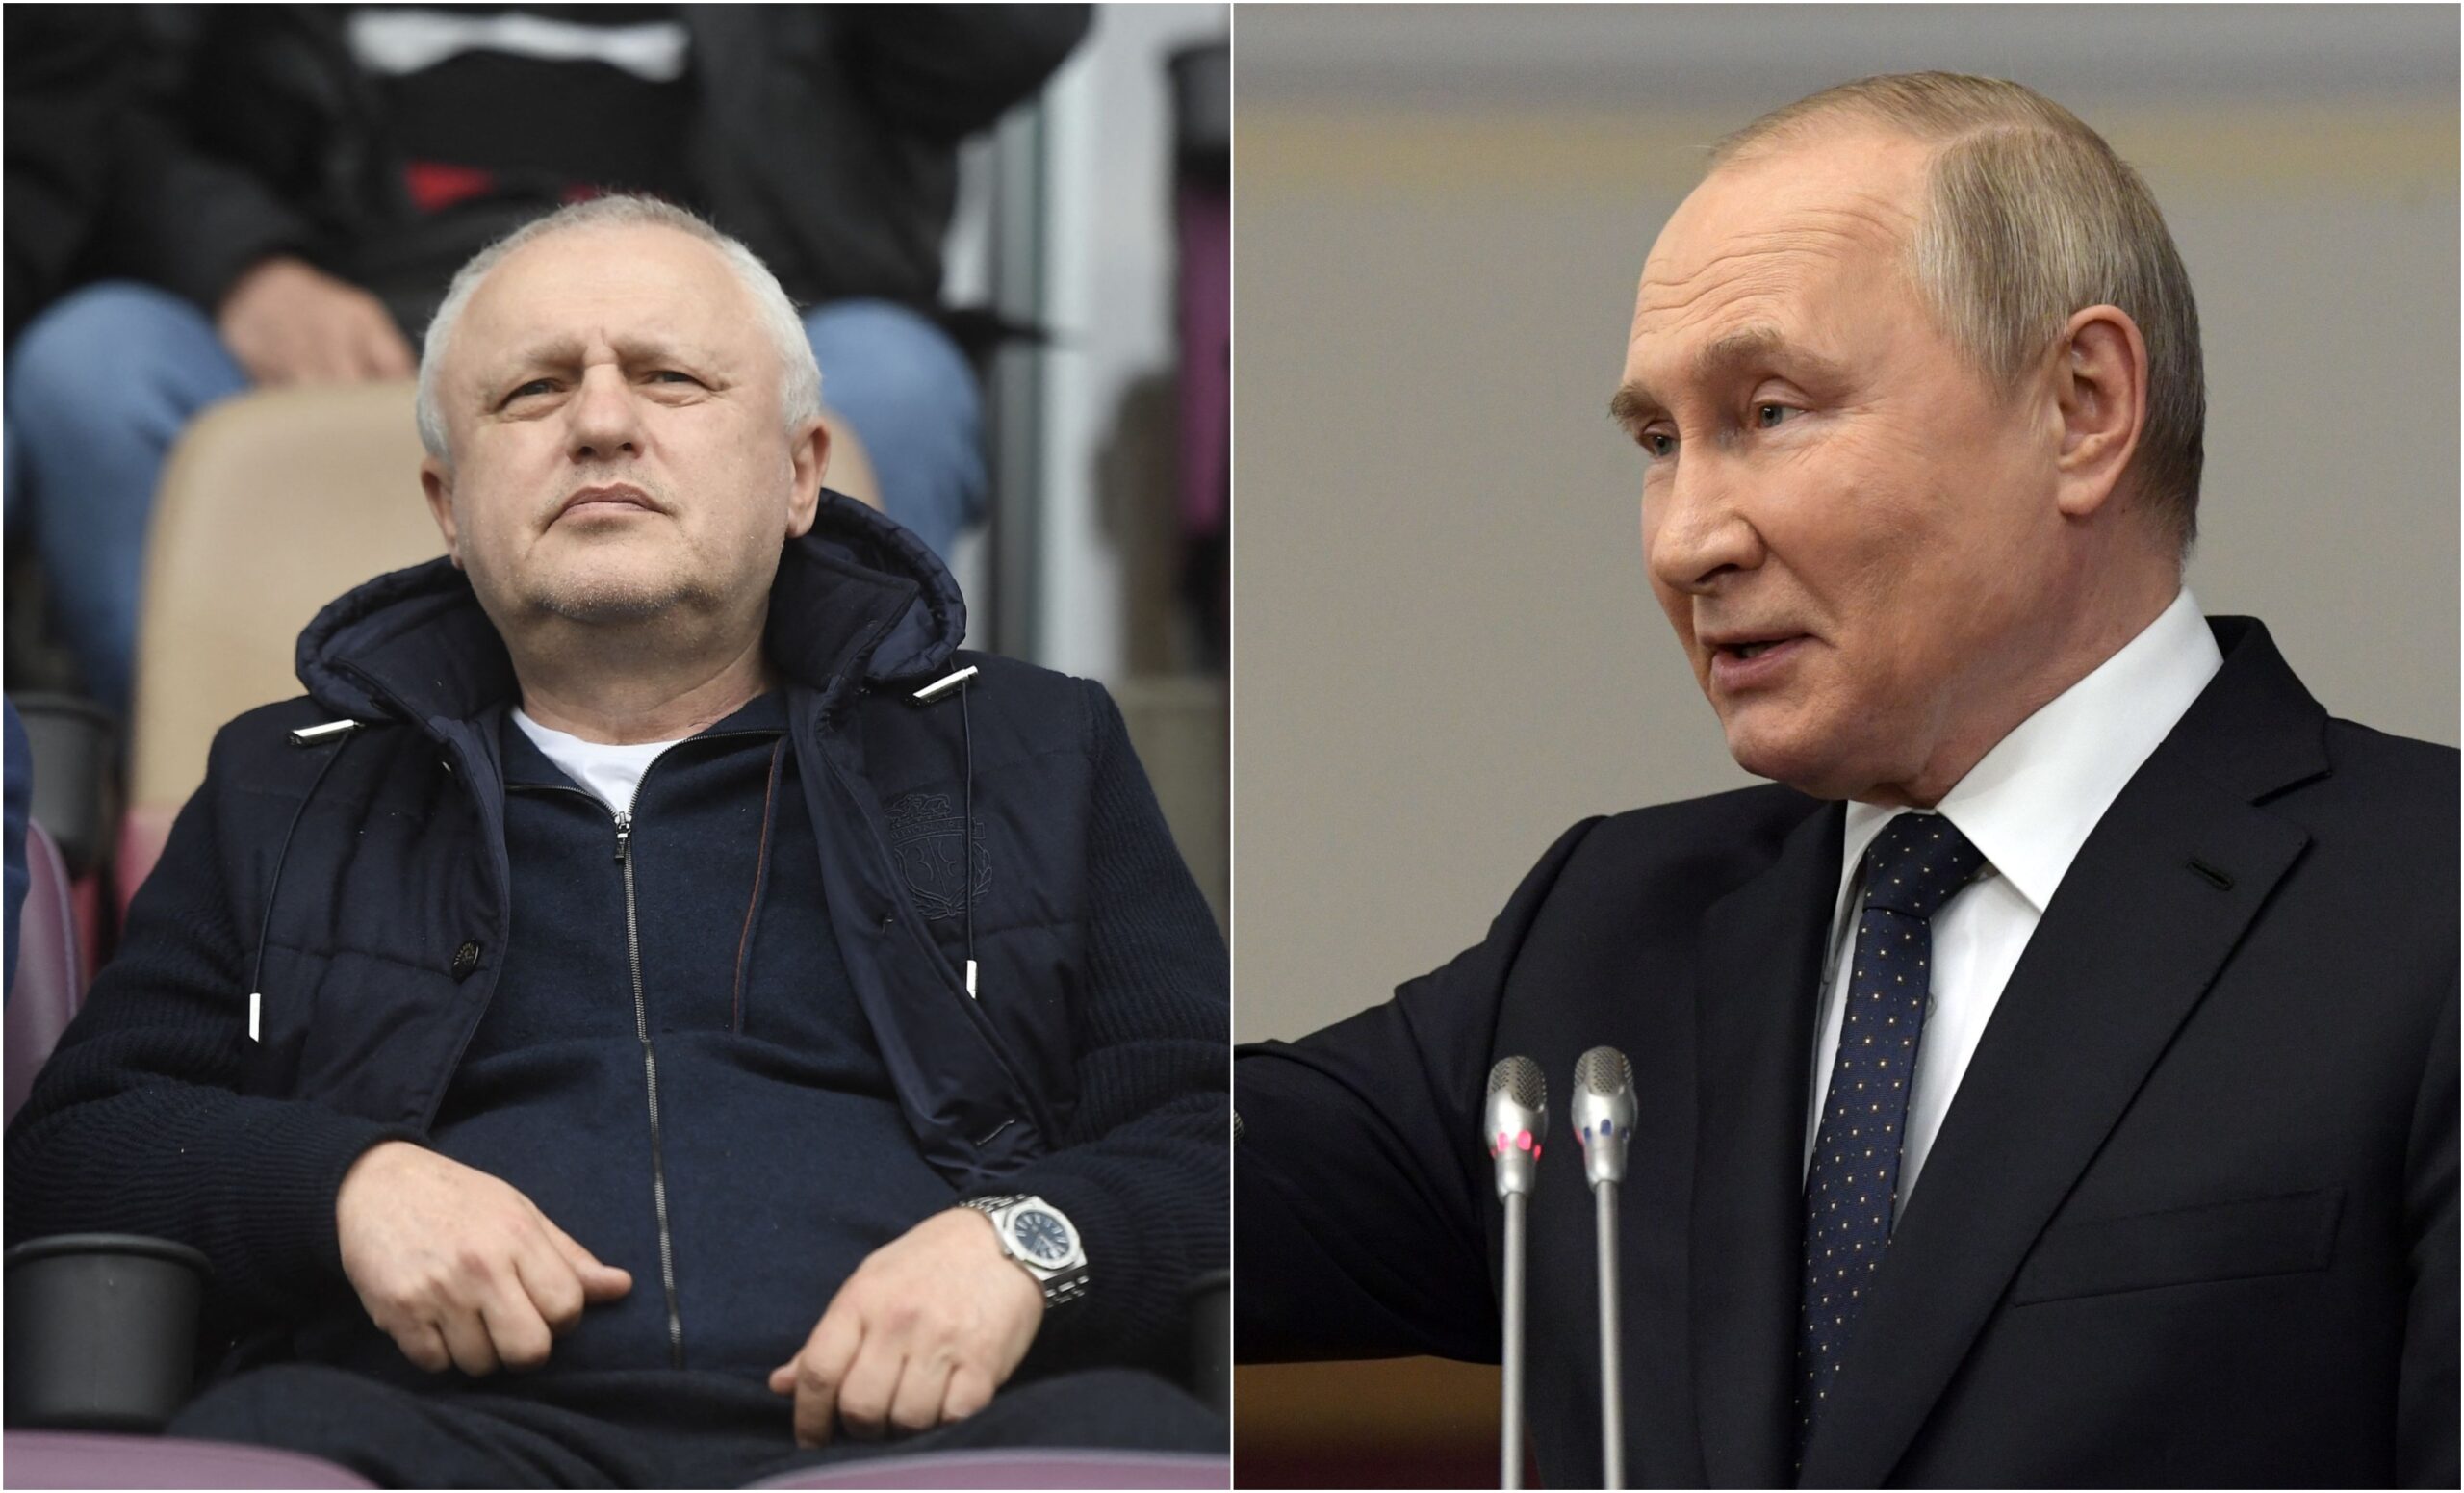 Colaj cu Igor Surkis și Vladimir Putin